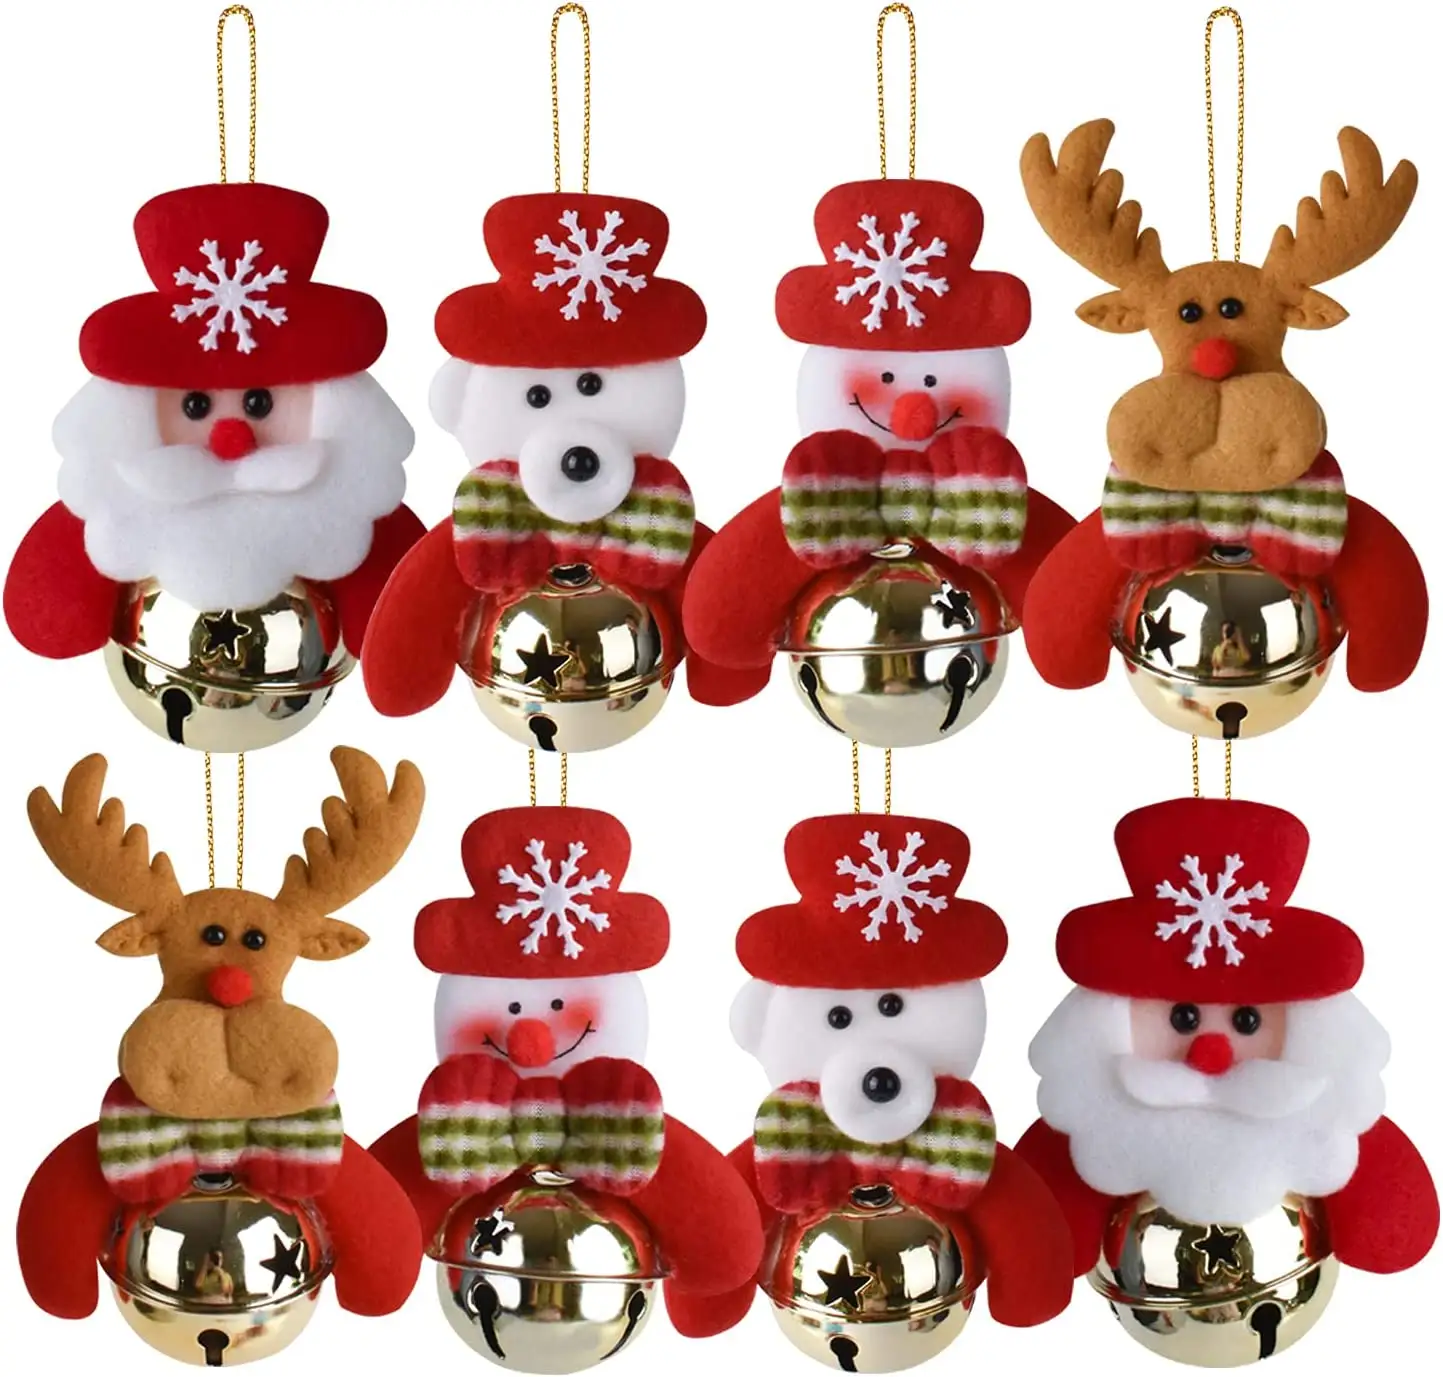 Tailai Christmas Tree Ornaments Hanging Bells Santa Claus Snowman Reindeer Bear Plush Dolls Home Decor 2022 Party Decorations